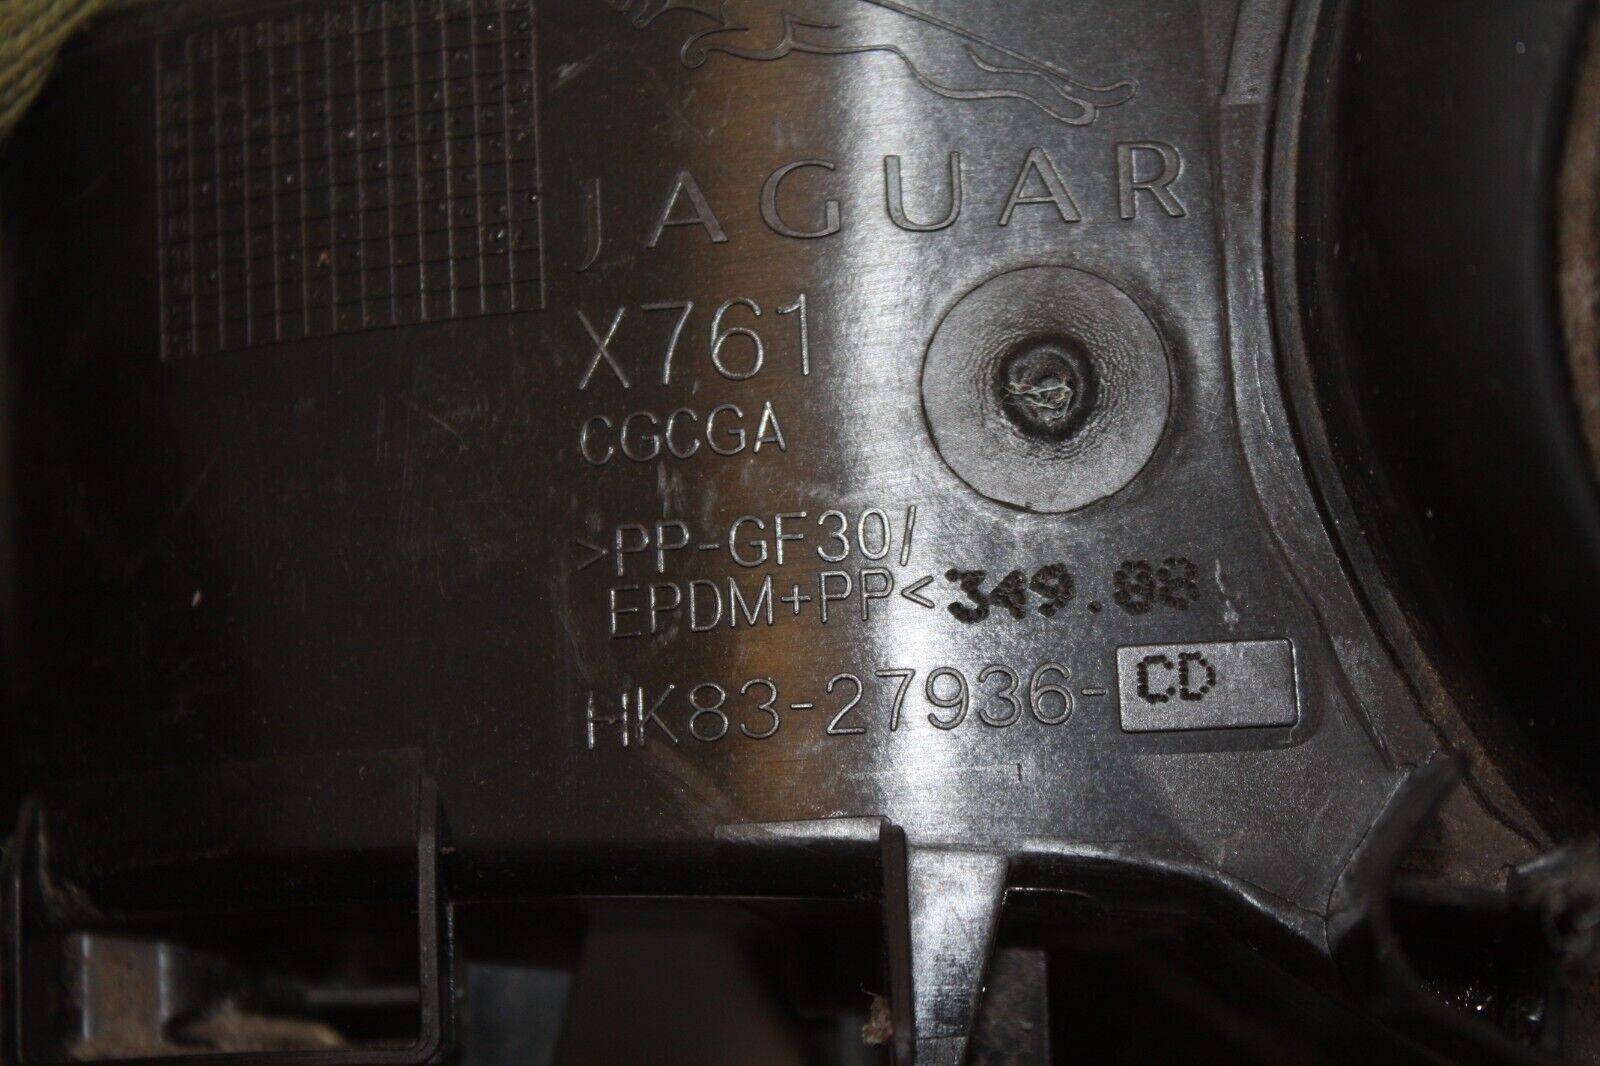 Jaguar-F-Pace-X761-Fuel-Tank-Flap-Cover-Cap-HK83-27936-CD-Genuine-176218733904-9